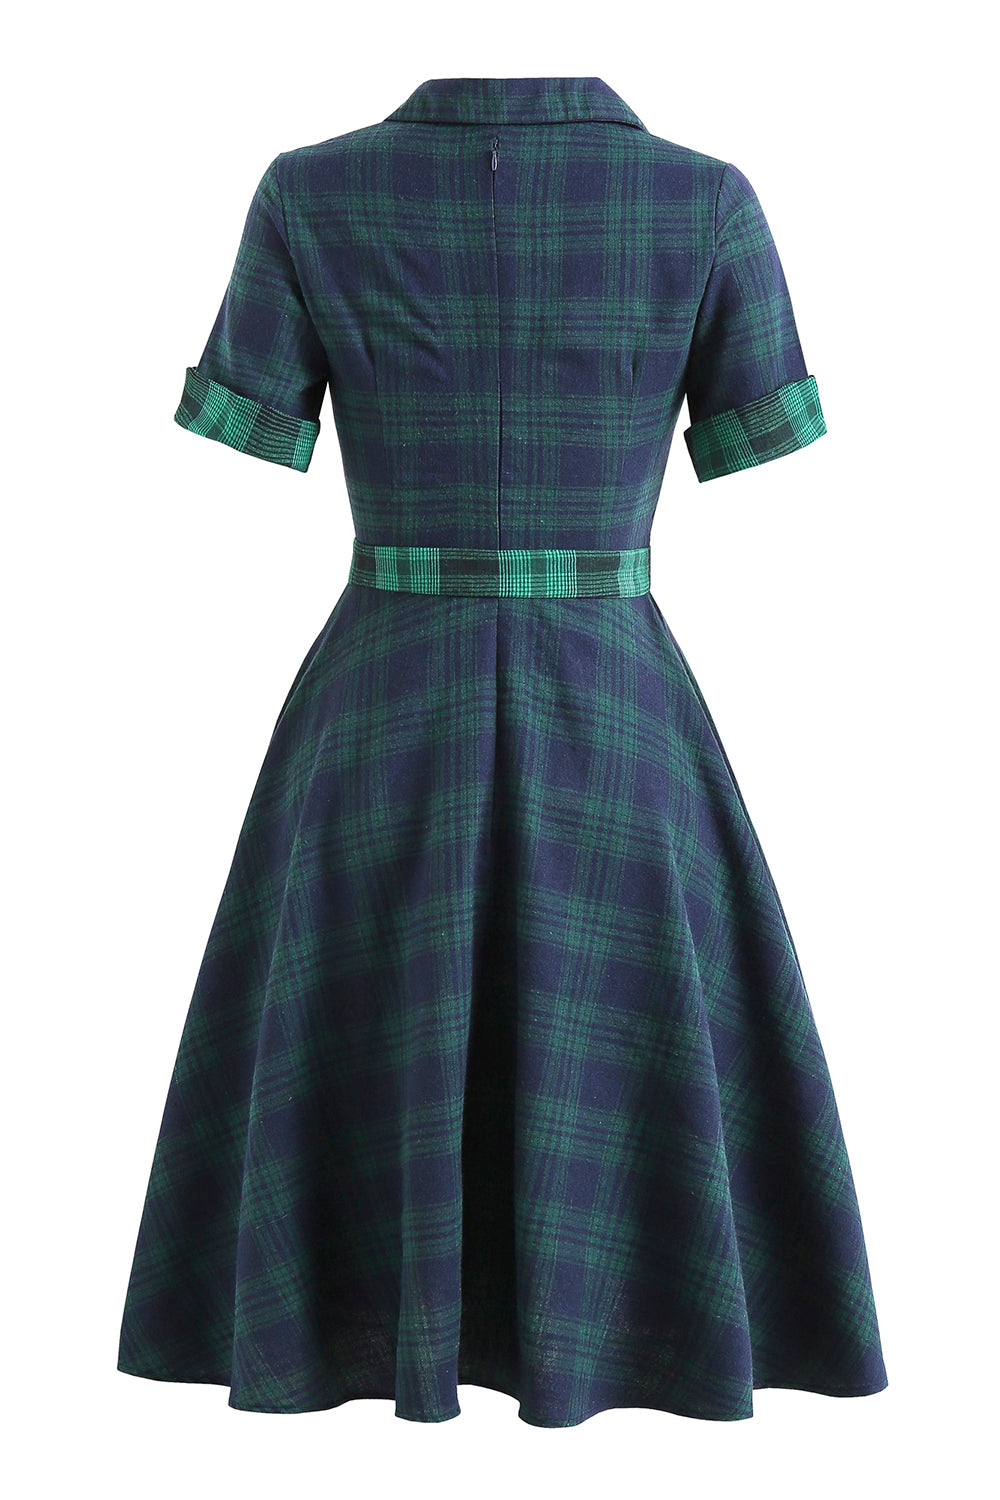 Green Plaid 1950s Dress